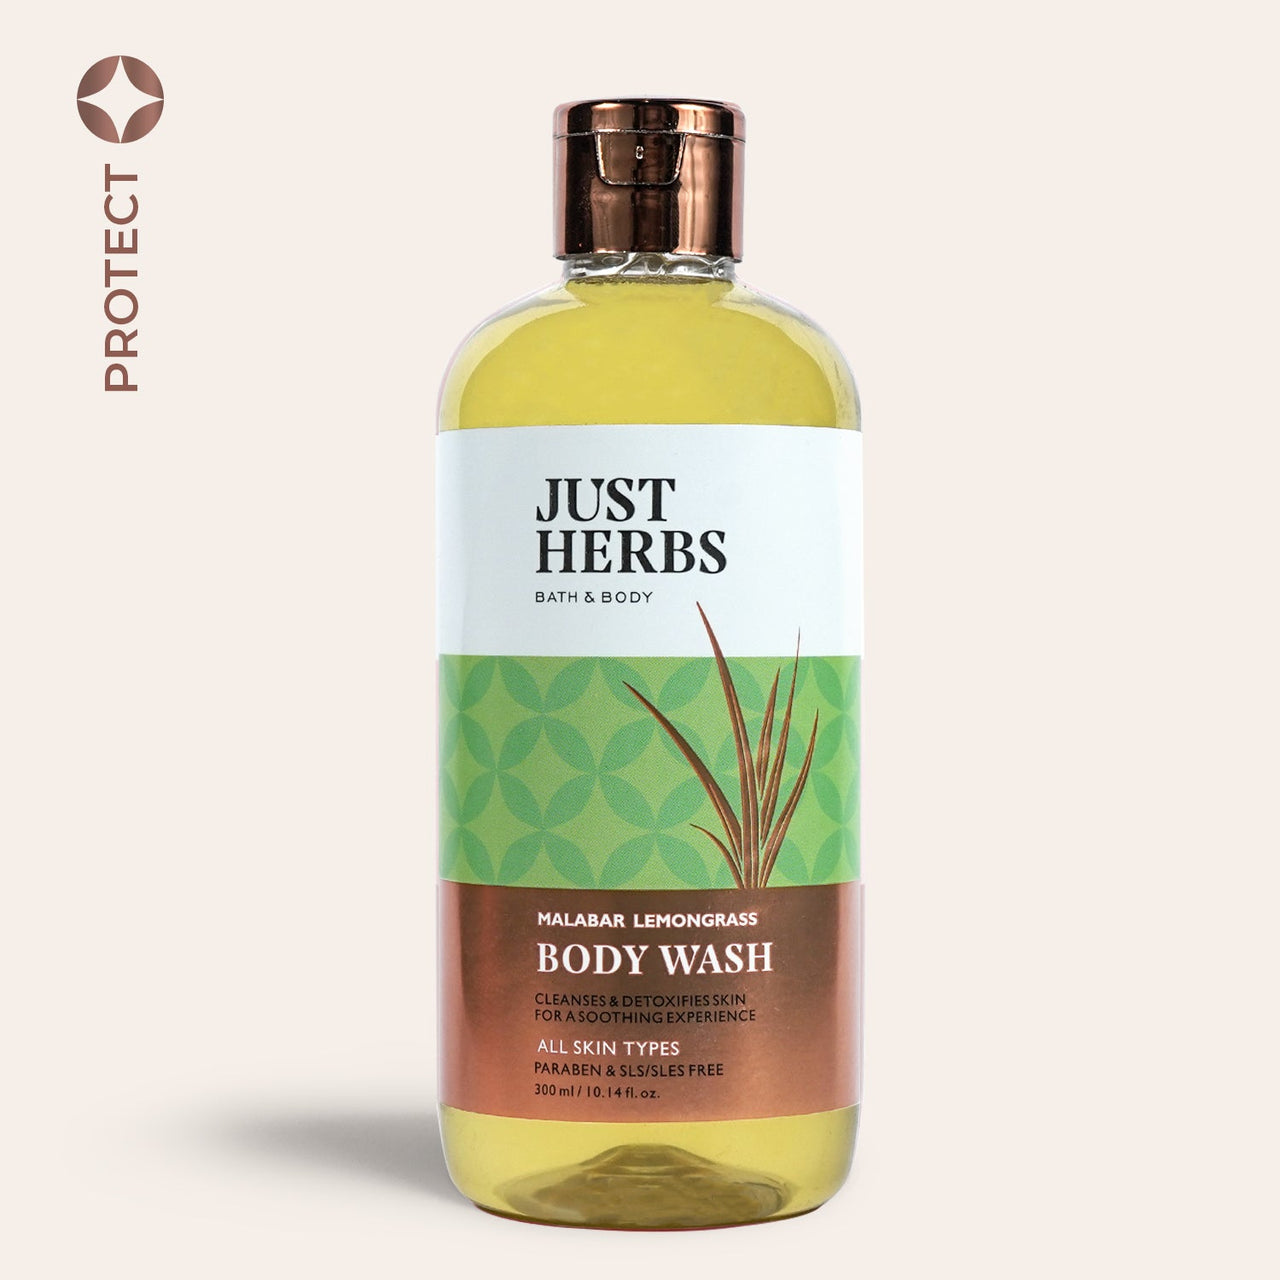 Malabar Lemongrass Body Wash - Just Herbs